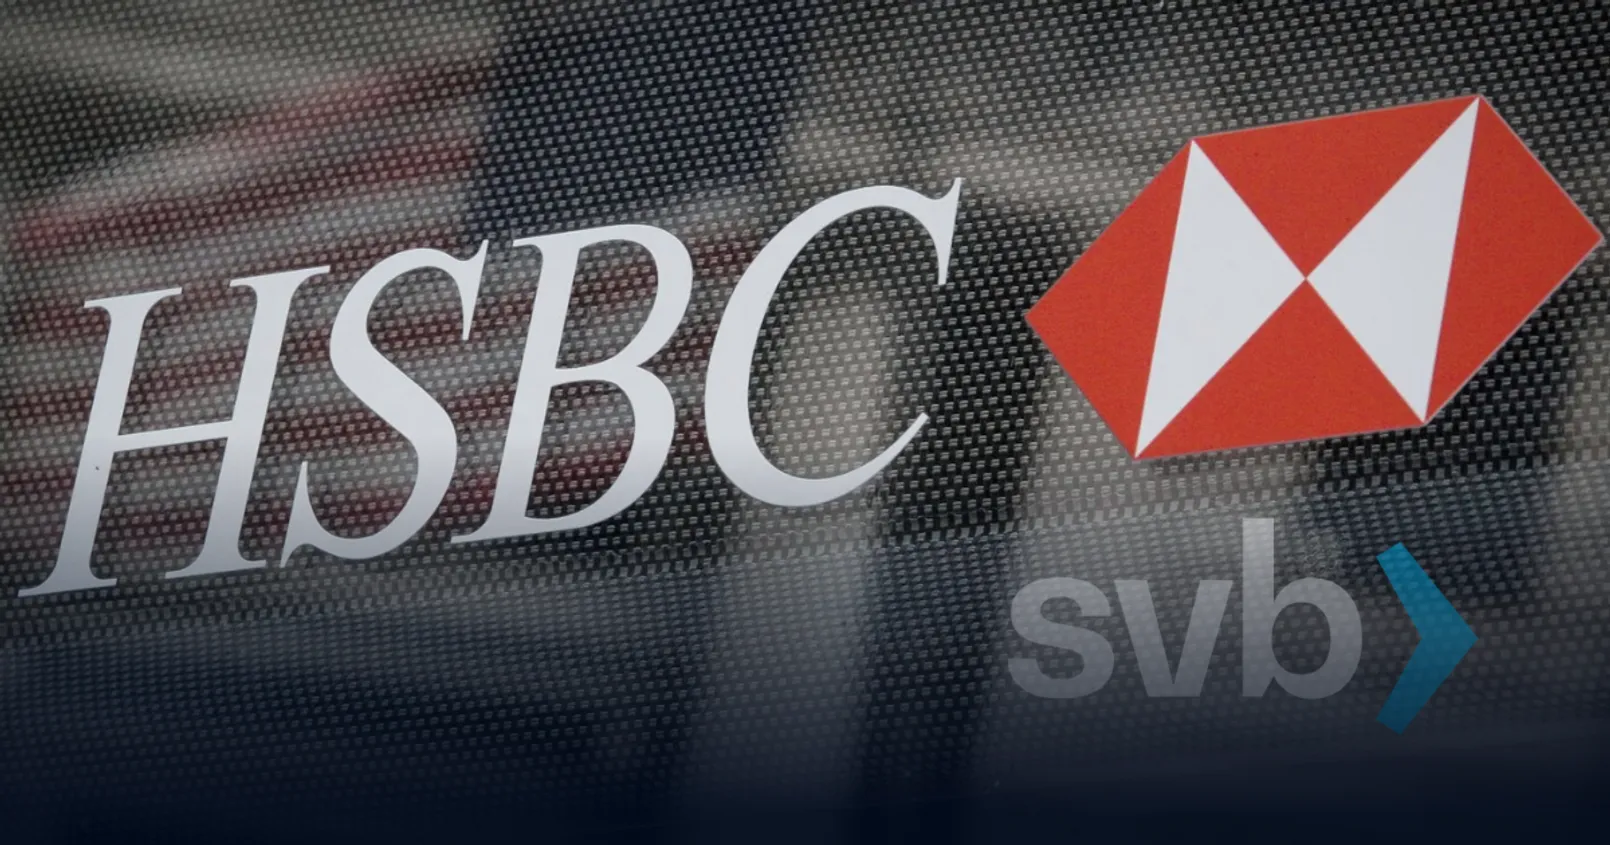 HSBC ประกาศปิดดีลเข้าซื้อ Silicon valley